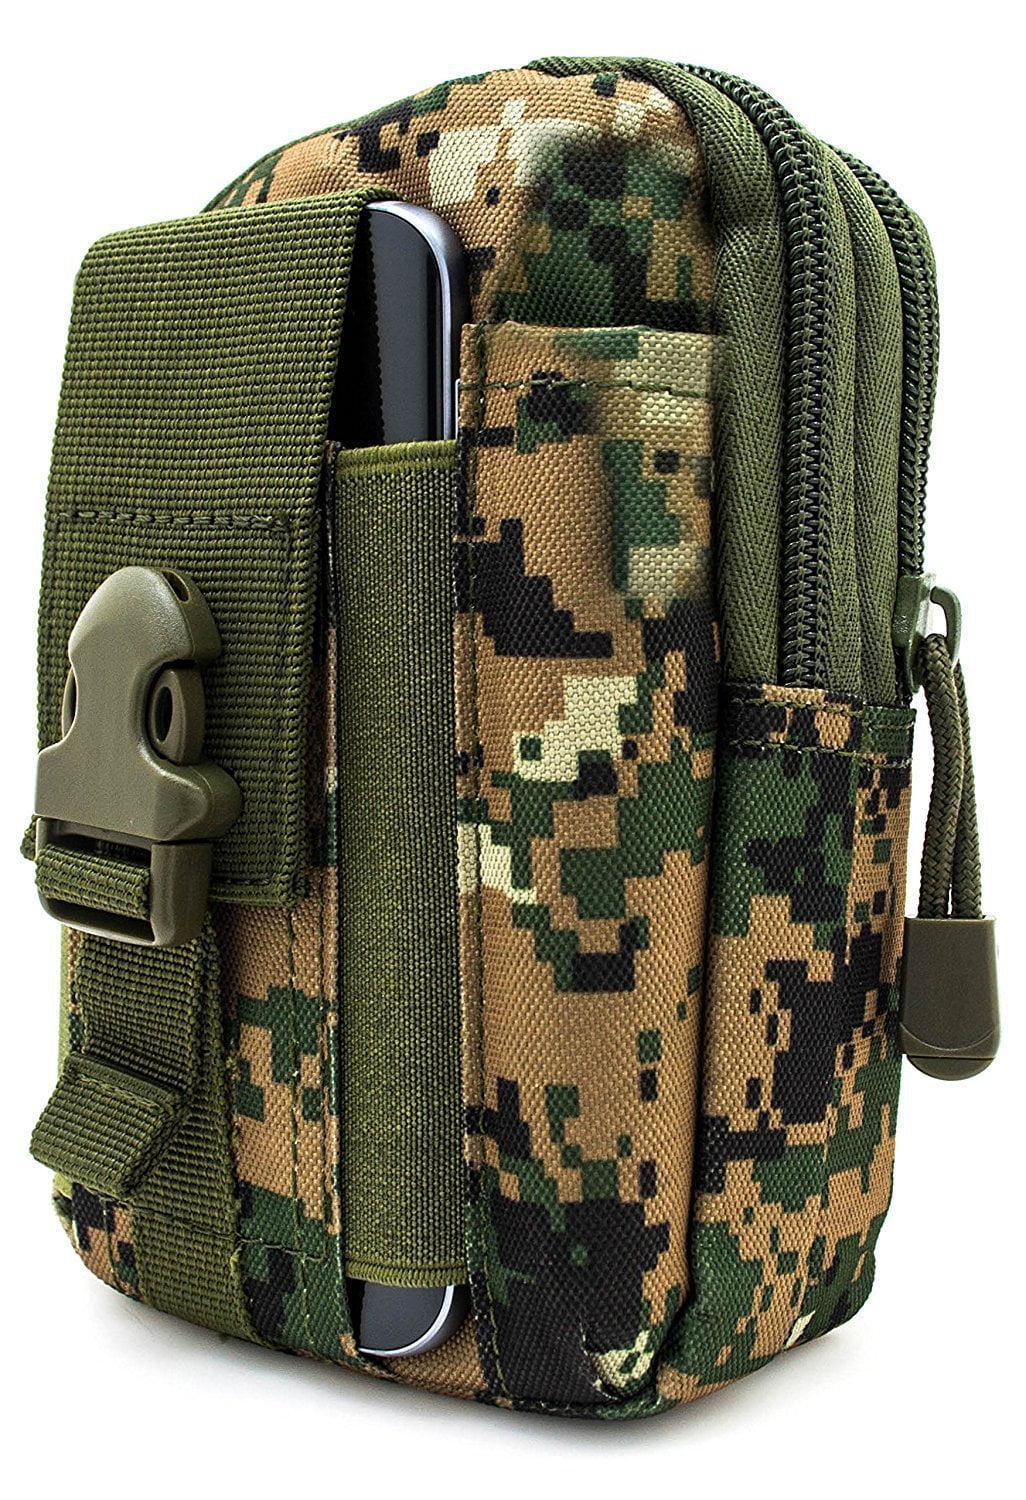 For LG G6 , G5, G4, G3 Vigor ~ Multipurpose Tactical Cover Smartphone Holster EDC Security Pack Carry Case Pouch Belt Waist Bag Gadget Money Pocket - Green Camo